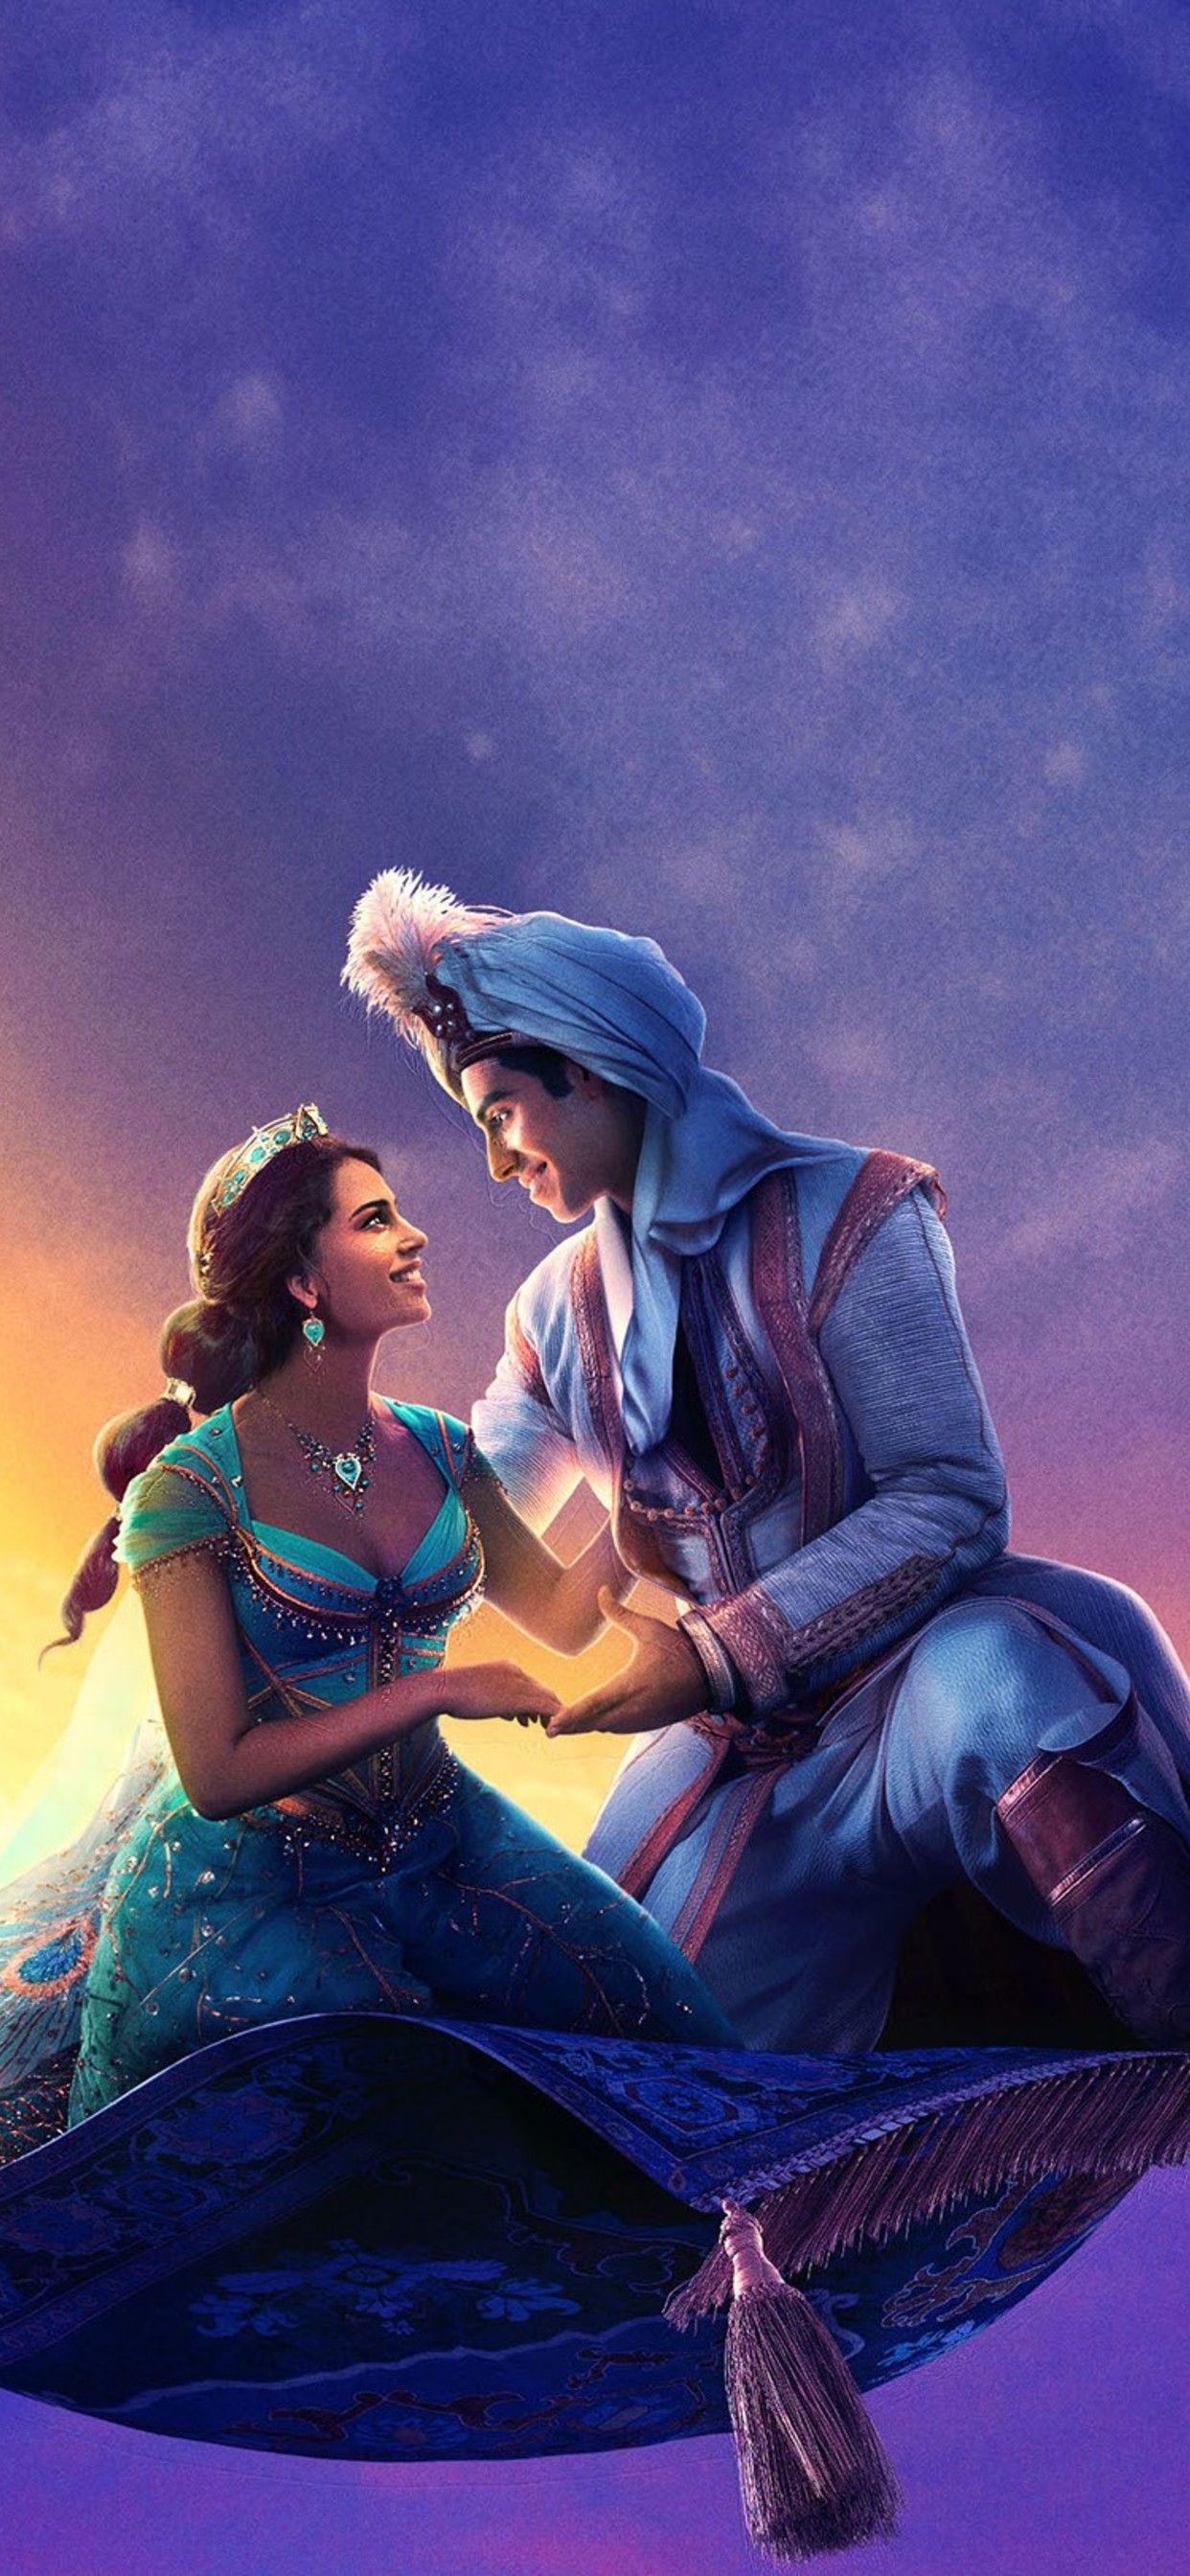 Aladdin 2019 Movie Banner 8K Wallpapers